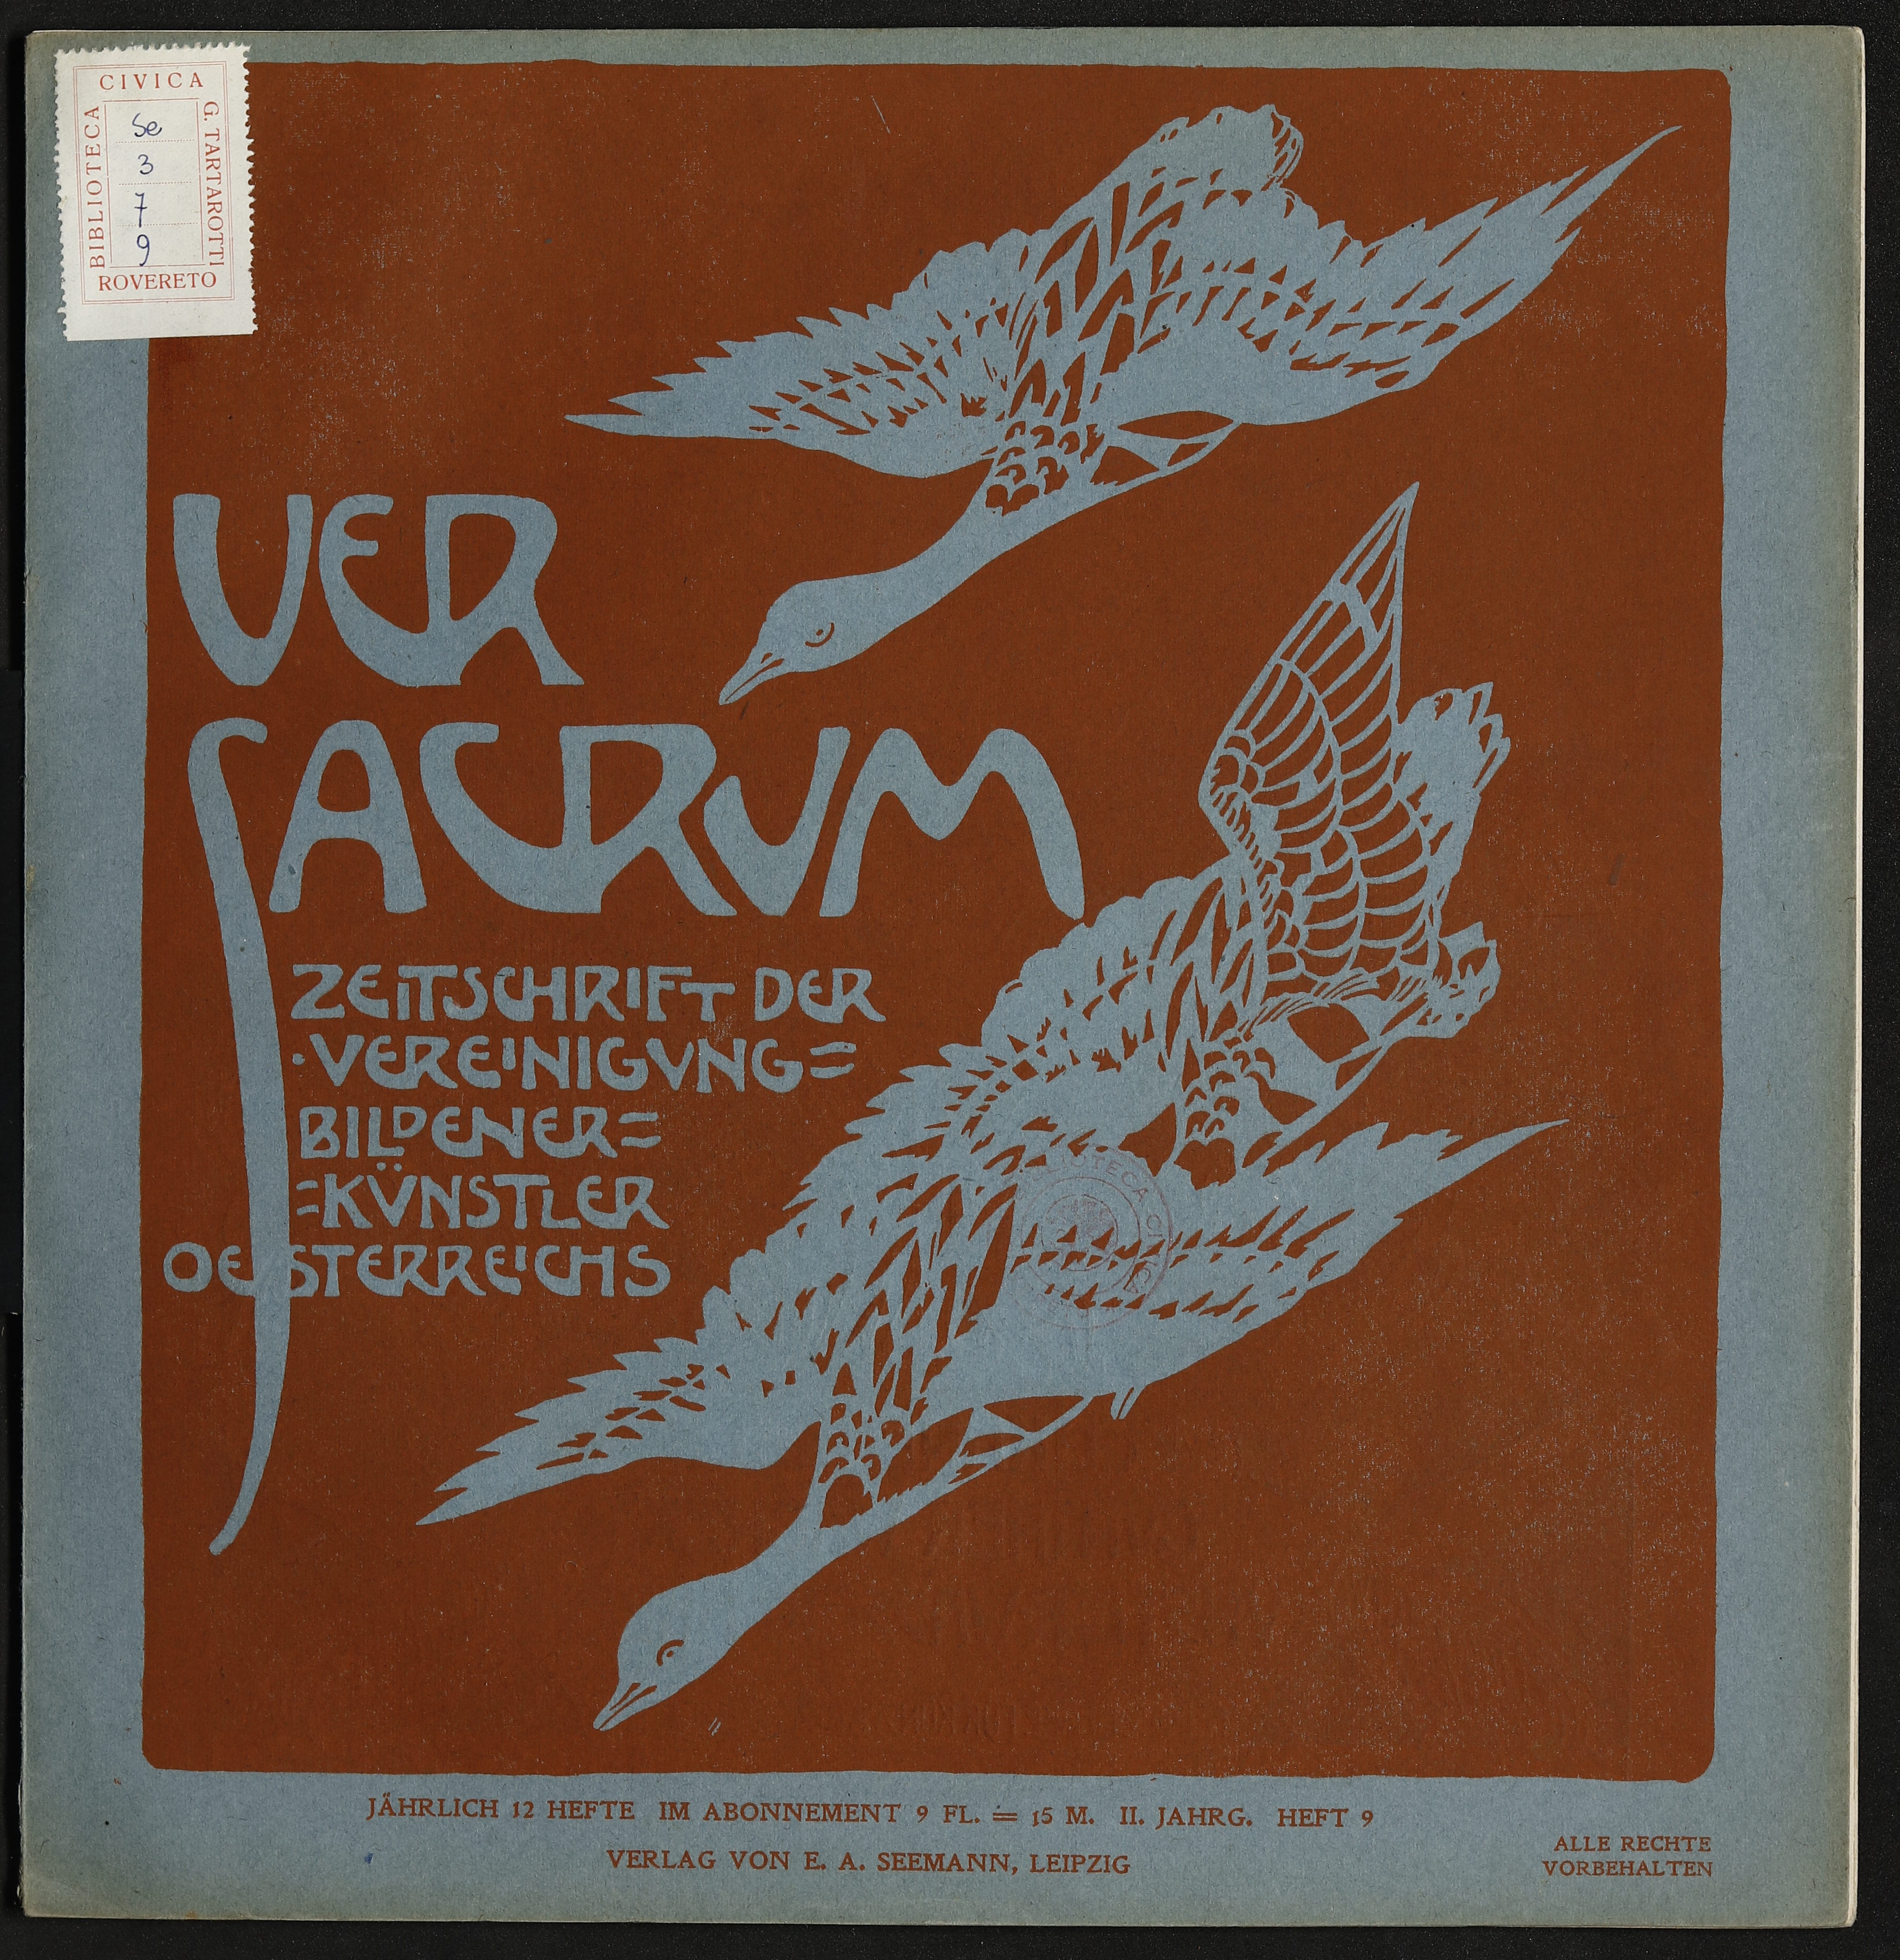 Ver sacrum – settembre 1899